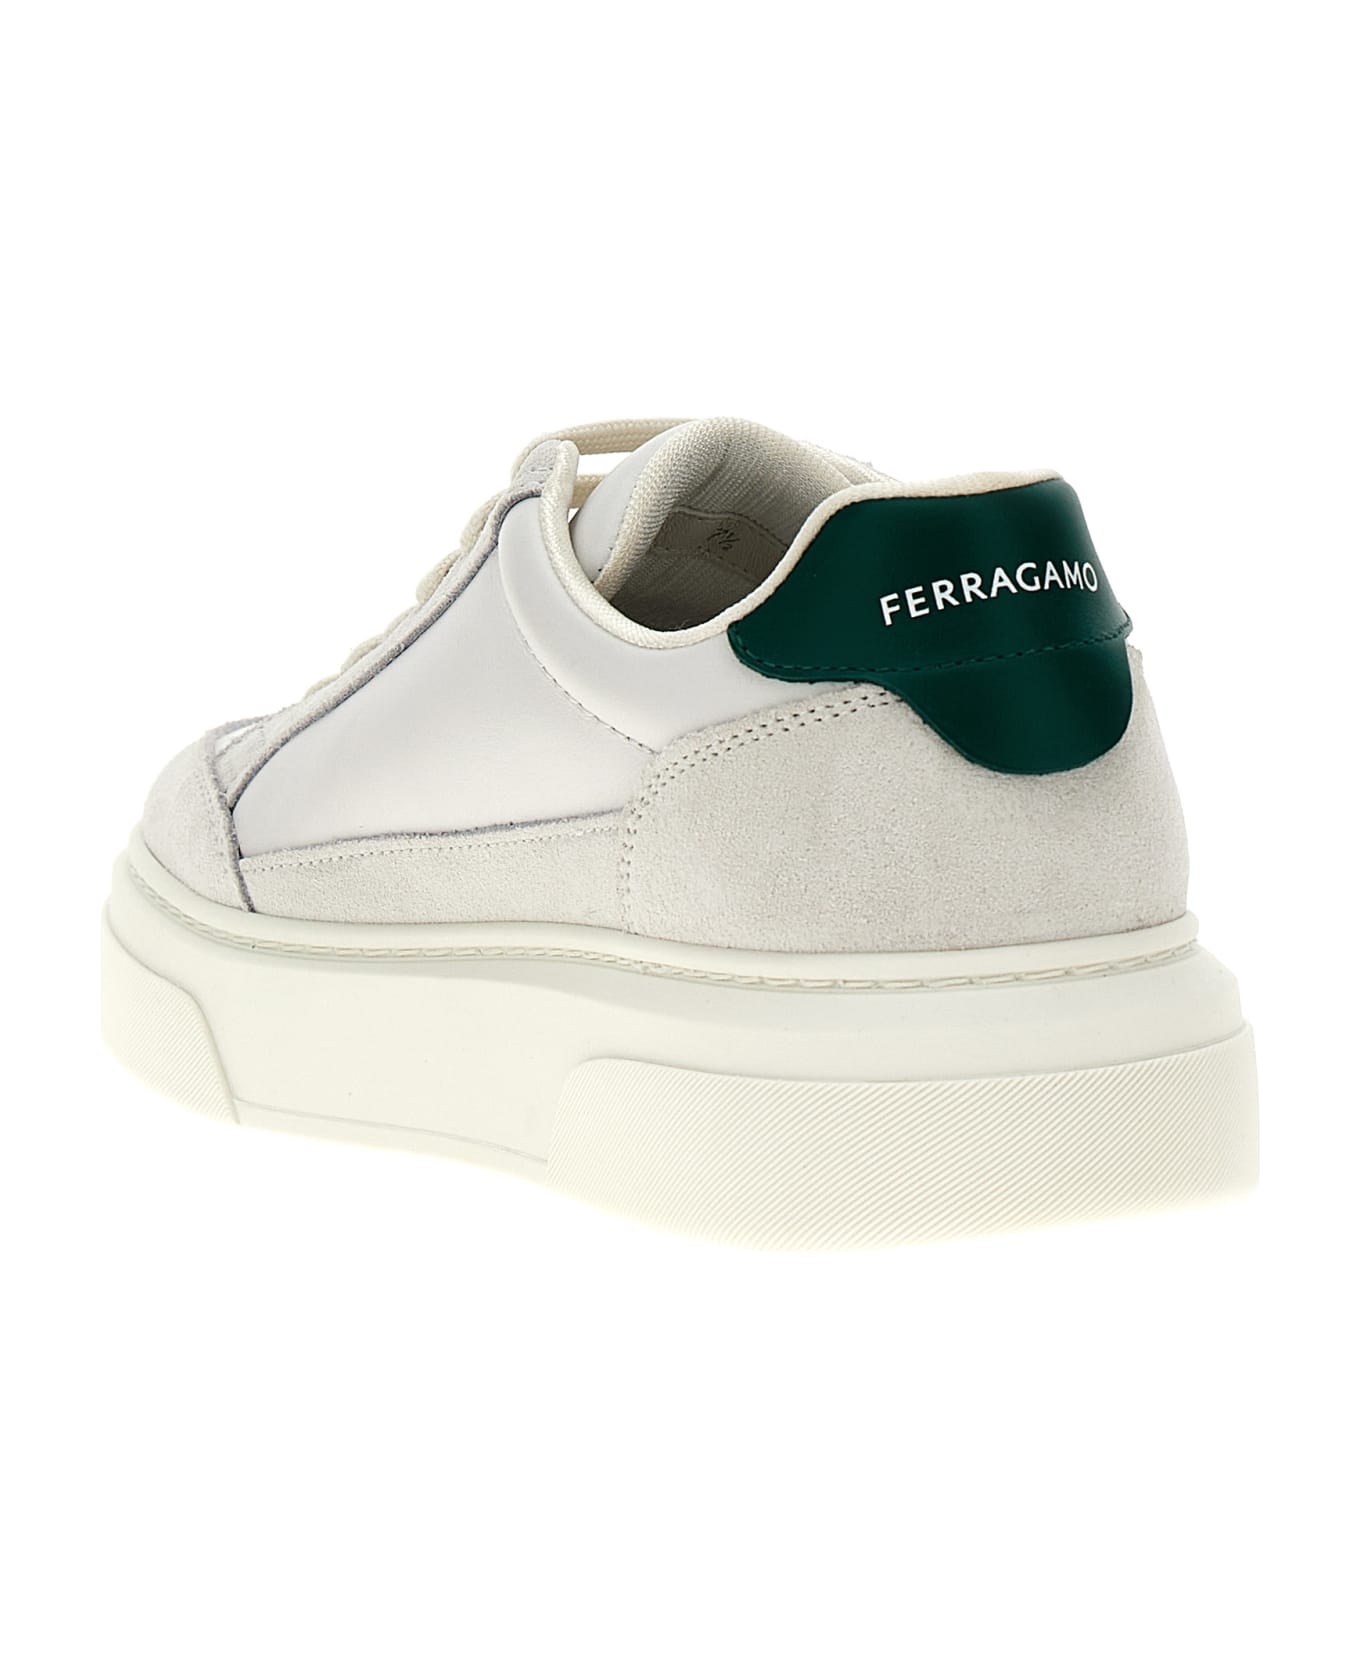 Ferragamo 'cassina' Sneakers - Green スニーカー